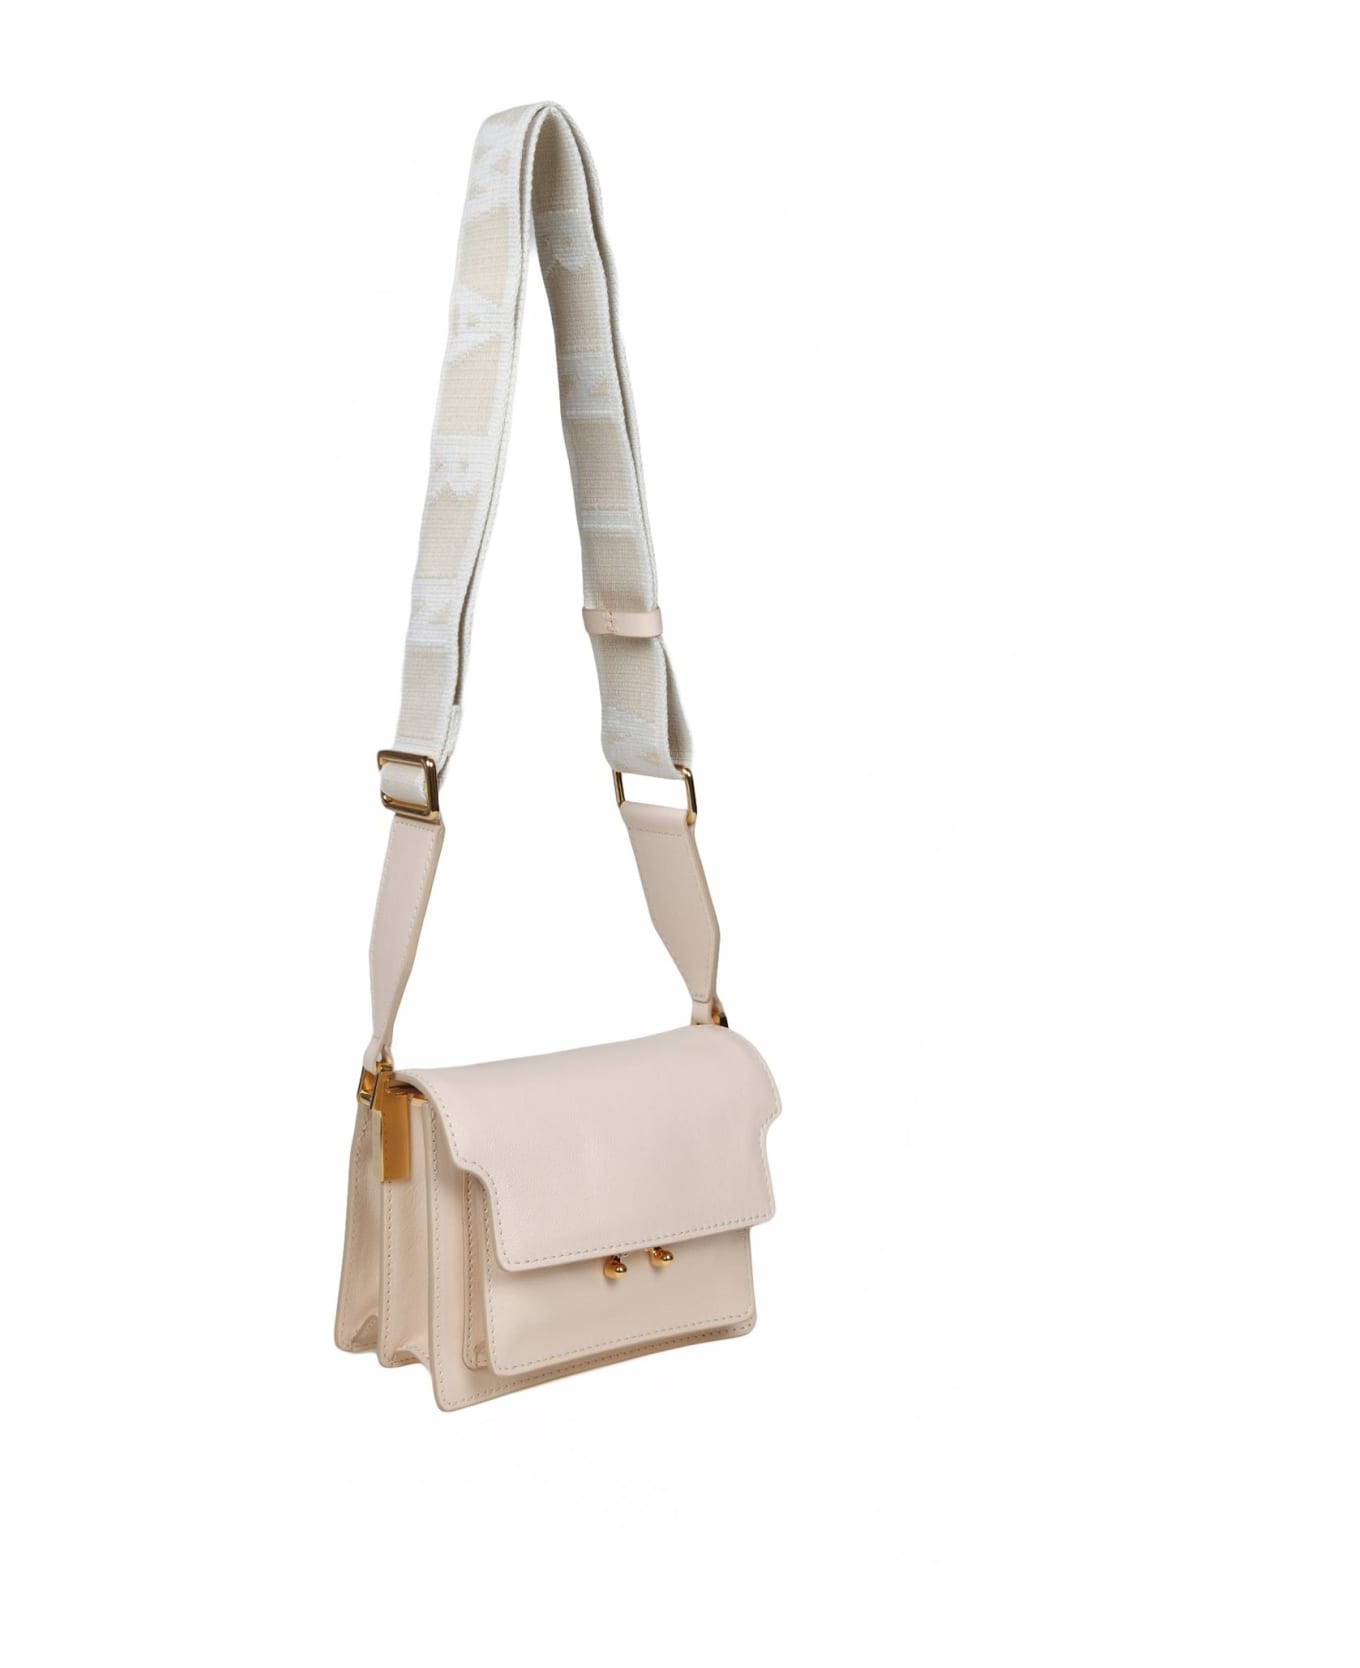 Marni Small Trunk Soft Shoulder Bag In Cream Color Leather - Cream